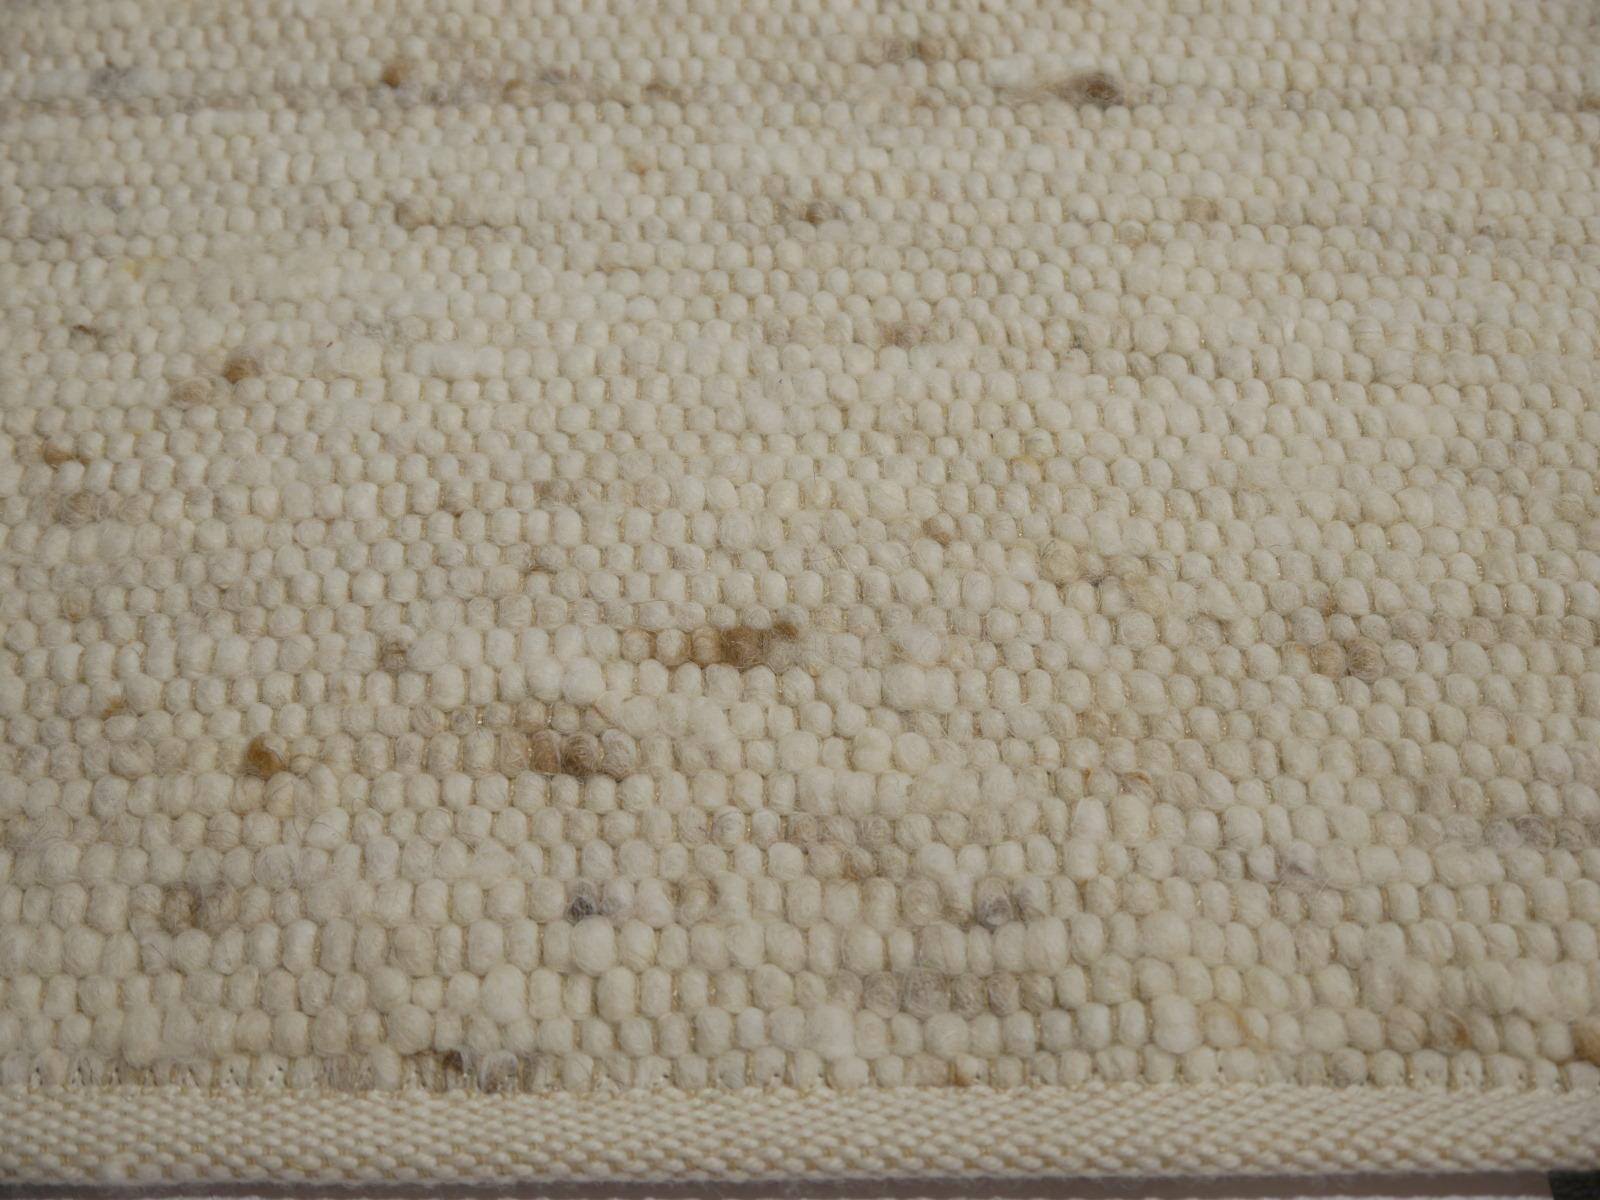 Tribal Rustic Beige Kilim Rug Wool Flat Hand-Woven European Carpet by Djoharian Design For Sale